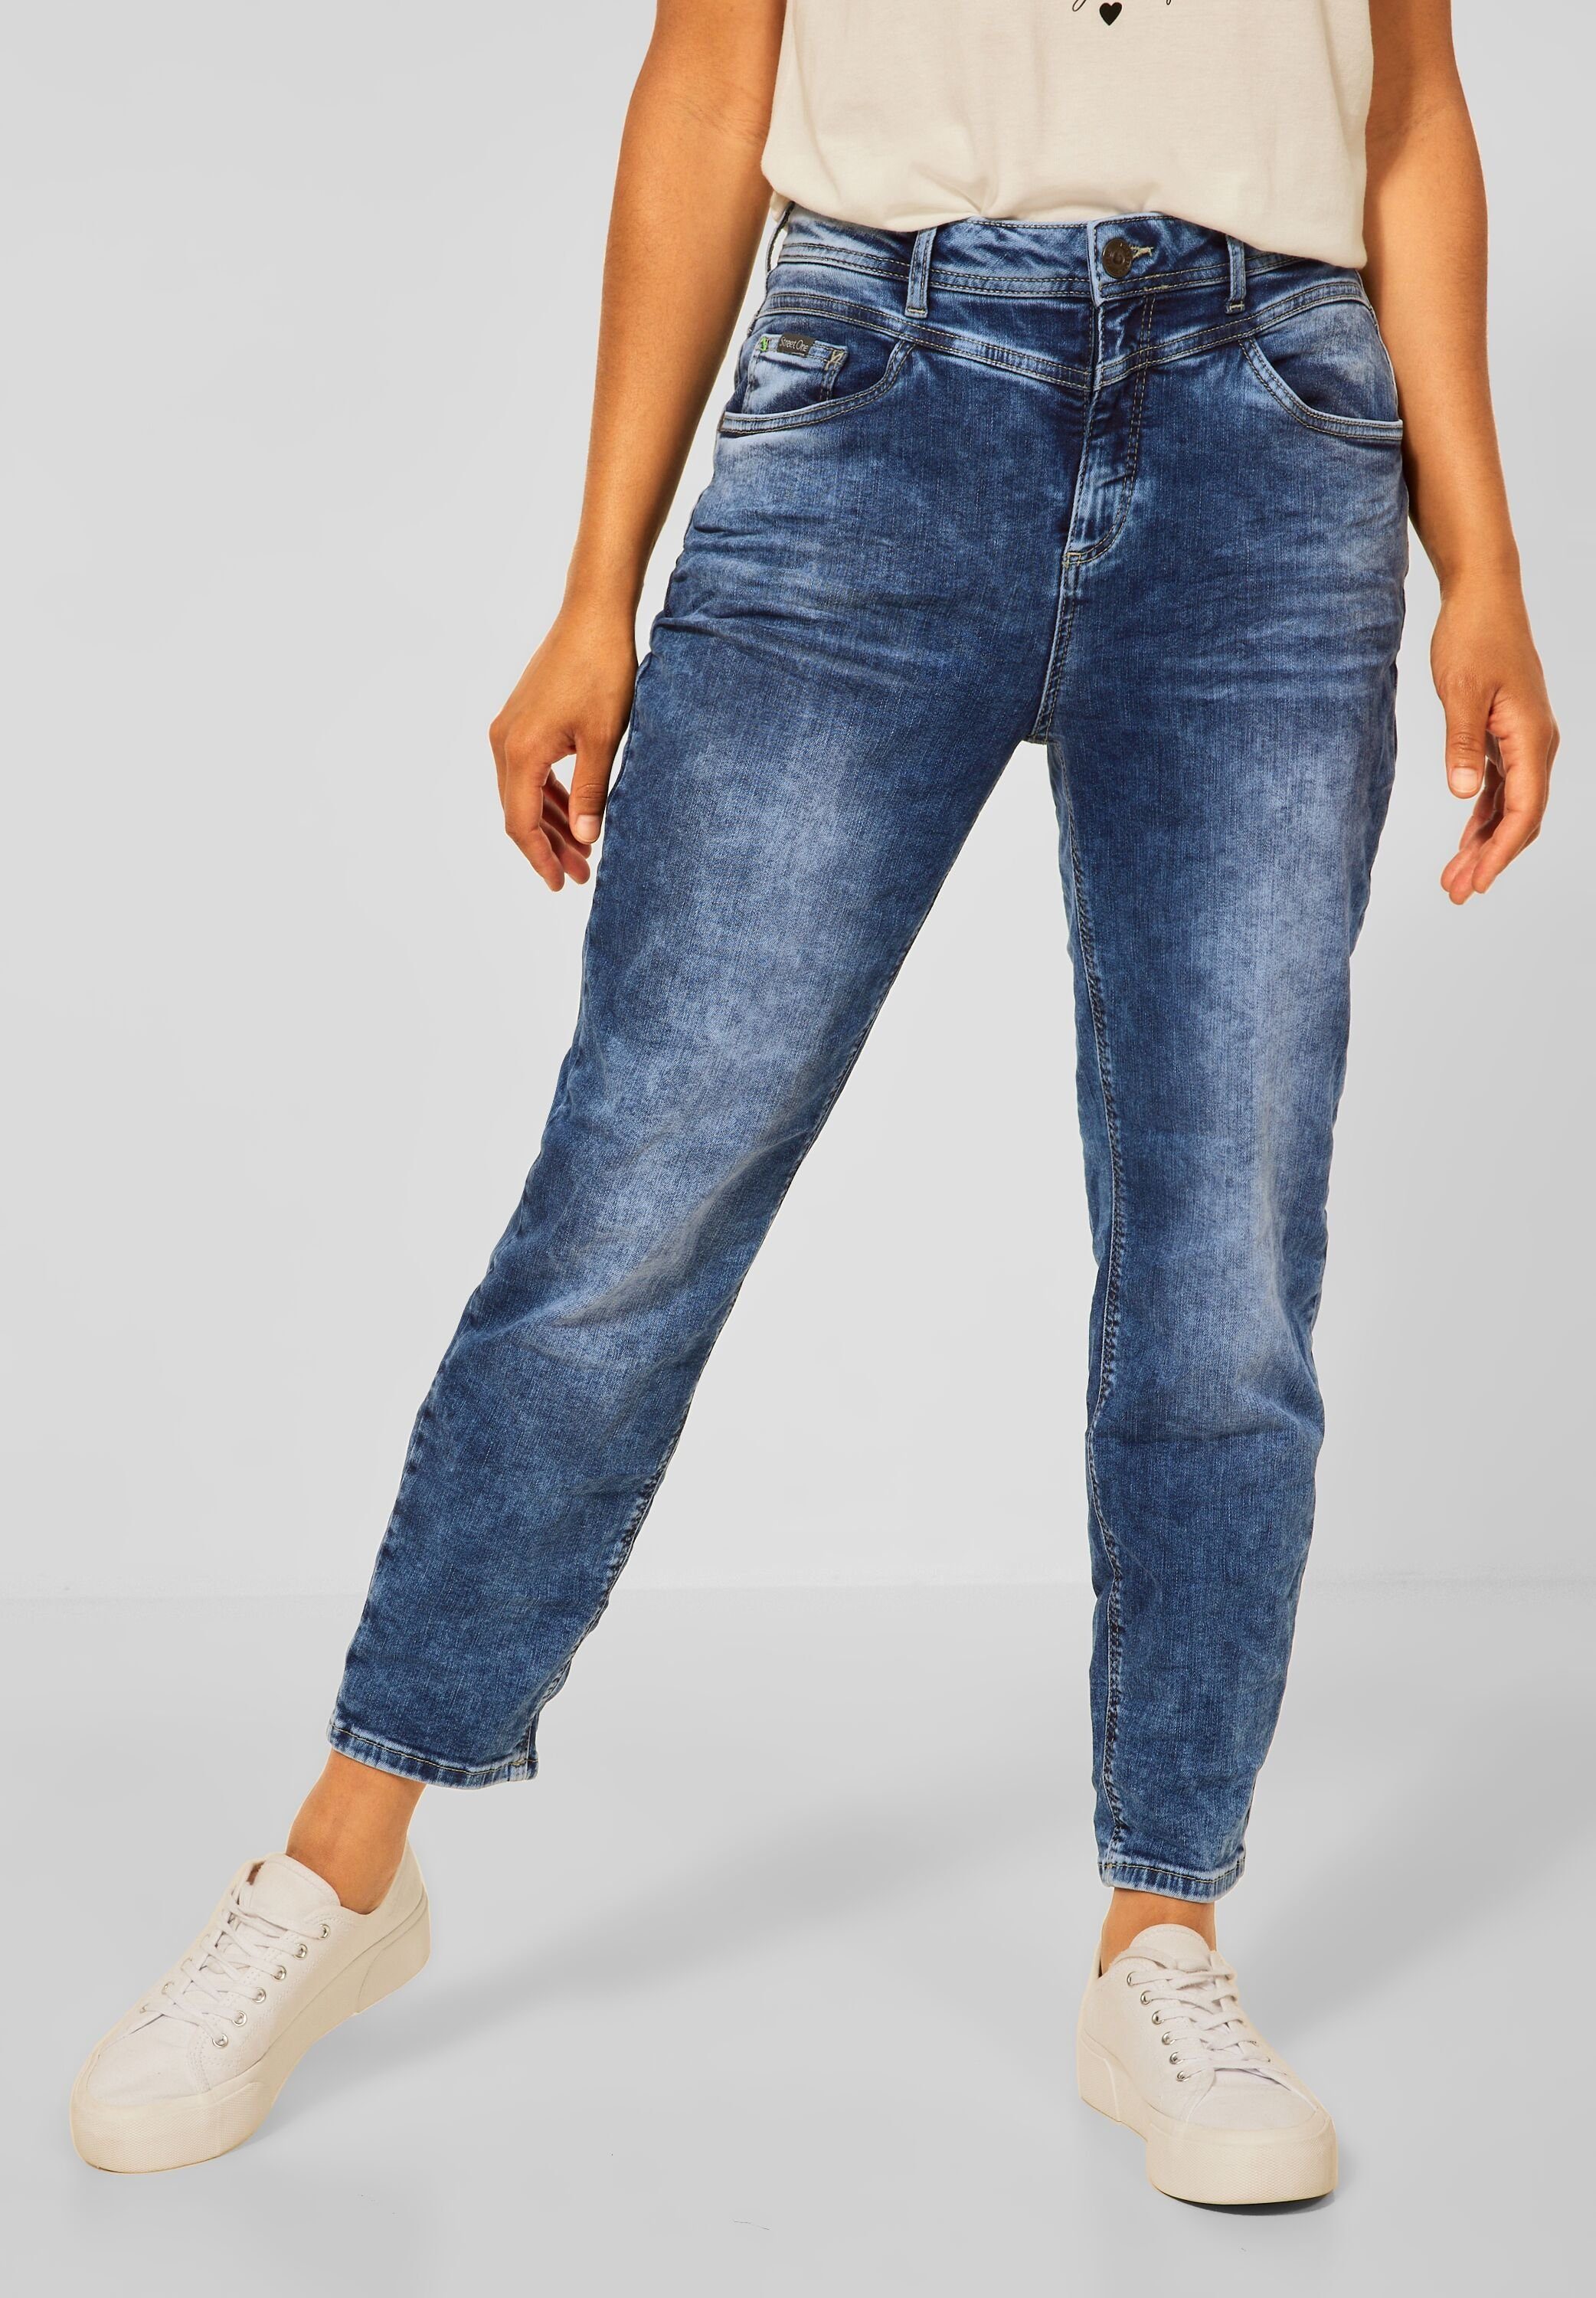 STREET ONE Bequeme Pockets, Five 1-tlg) in Jeans 26/28 ca.: 17 cm, Innenbeinlänge One 68 Maße Indi Authentic Größe ( Blue bei Fit Jeans Saumweite Street cm Loose